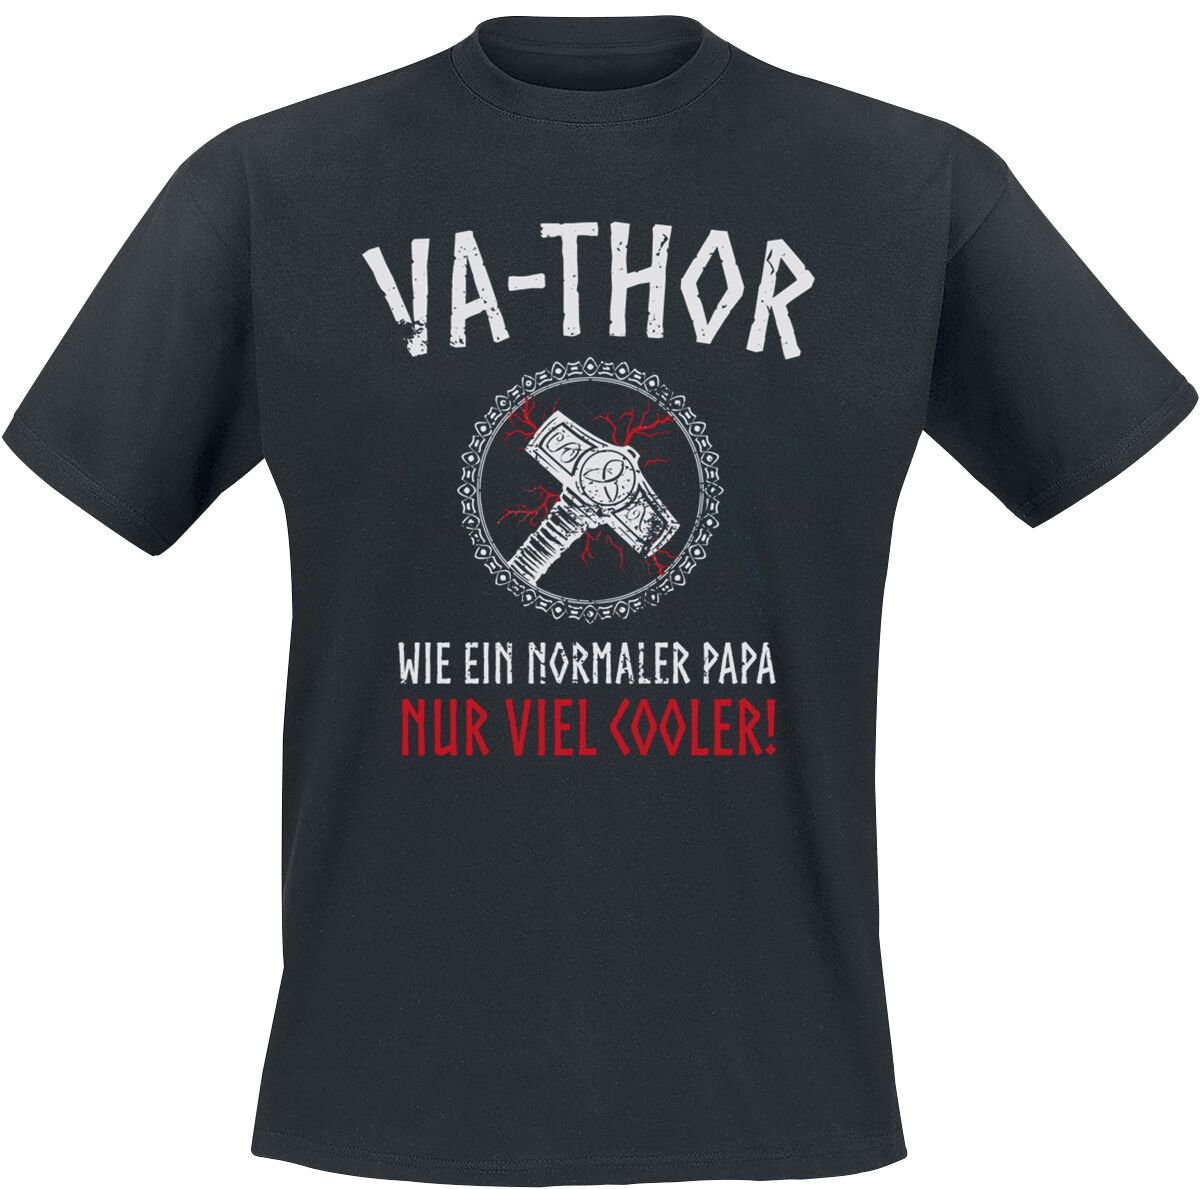 Familie & Freunde Va-Thor T-Shirt schwarz in 4XL